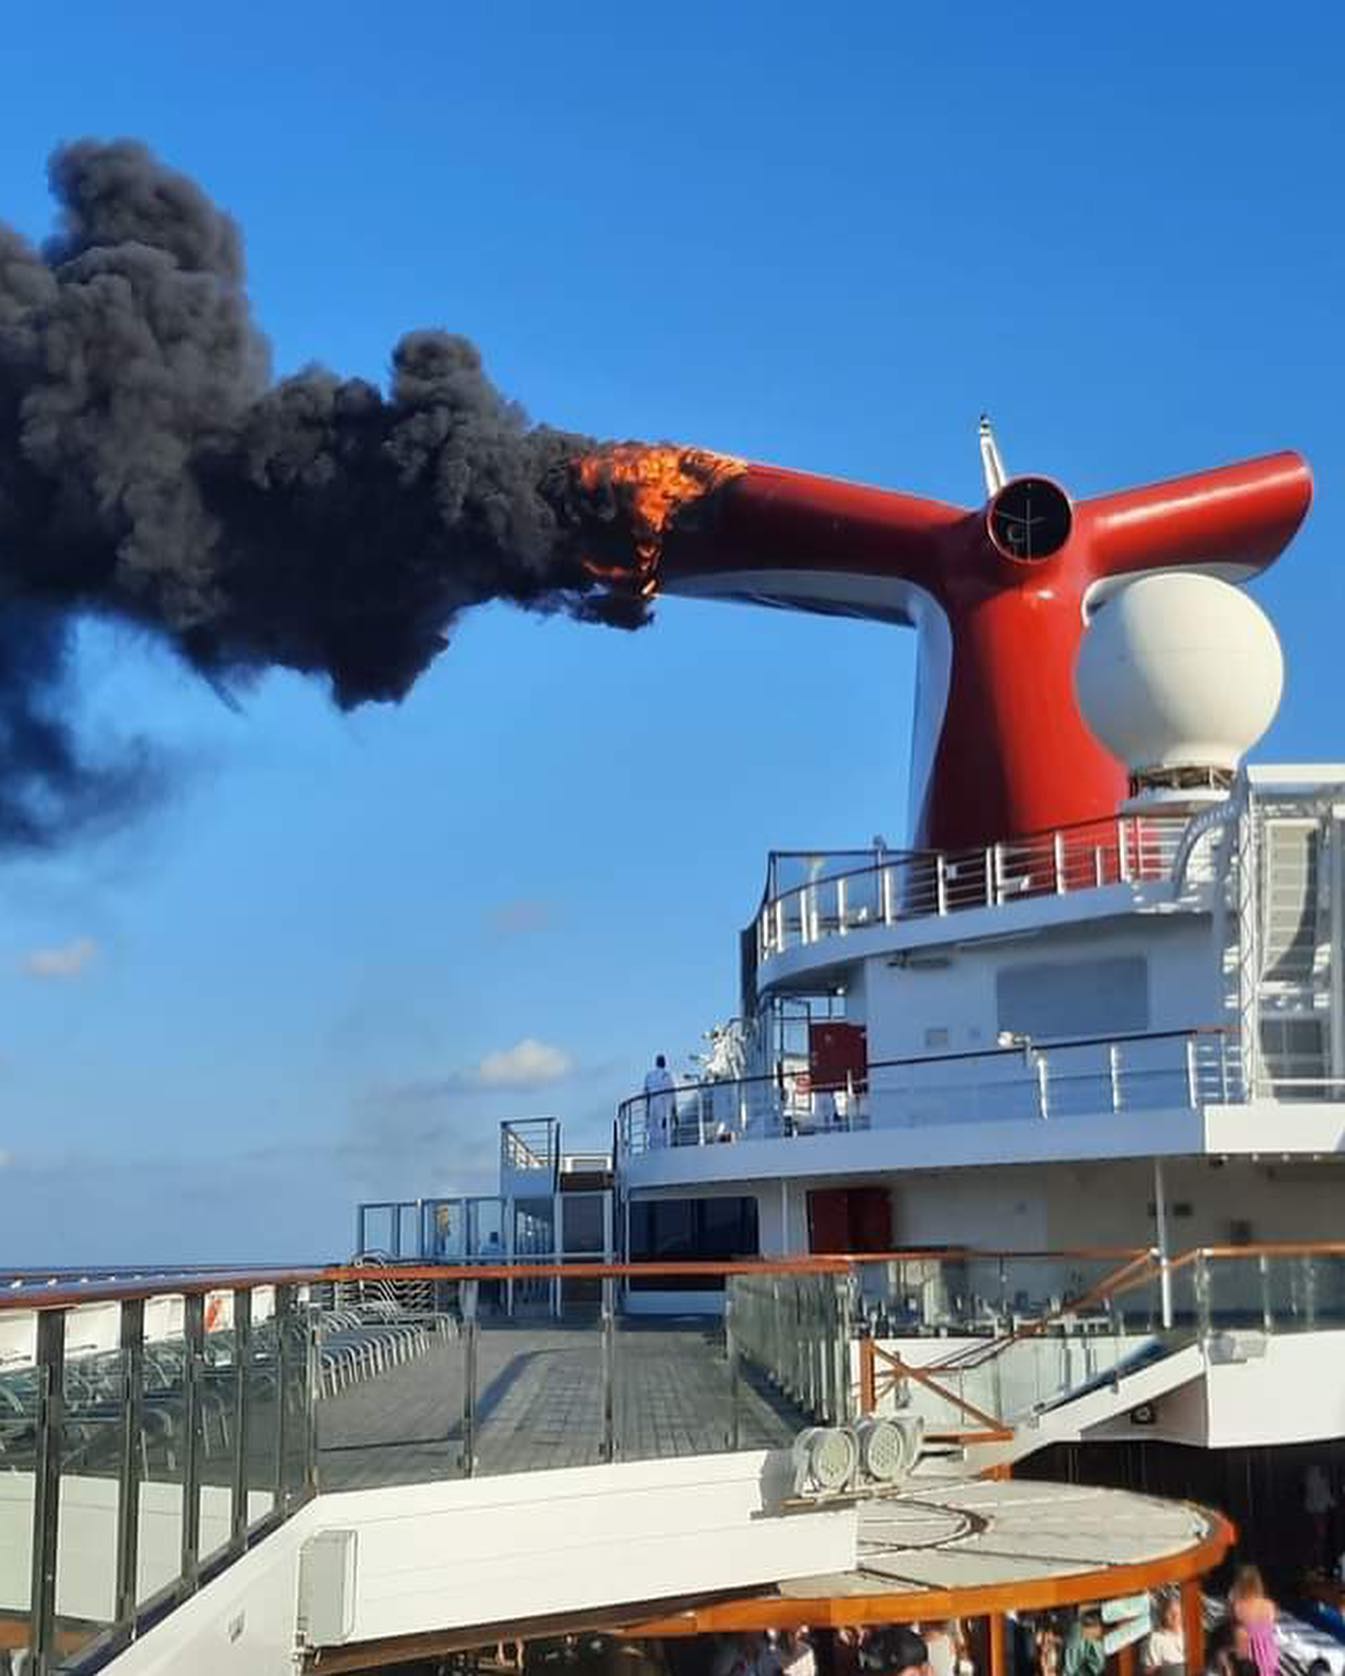 Carnival cruise ship fire - sea